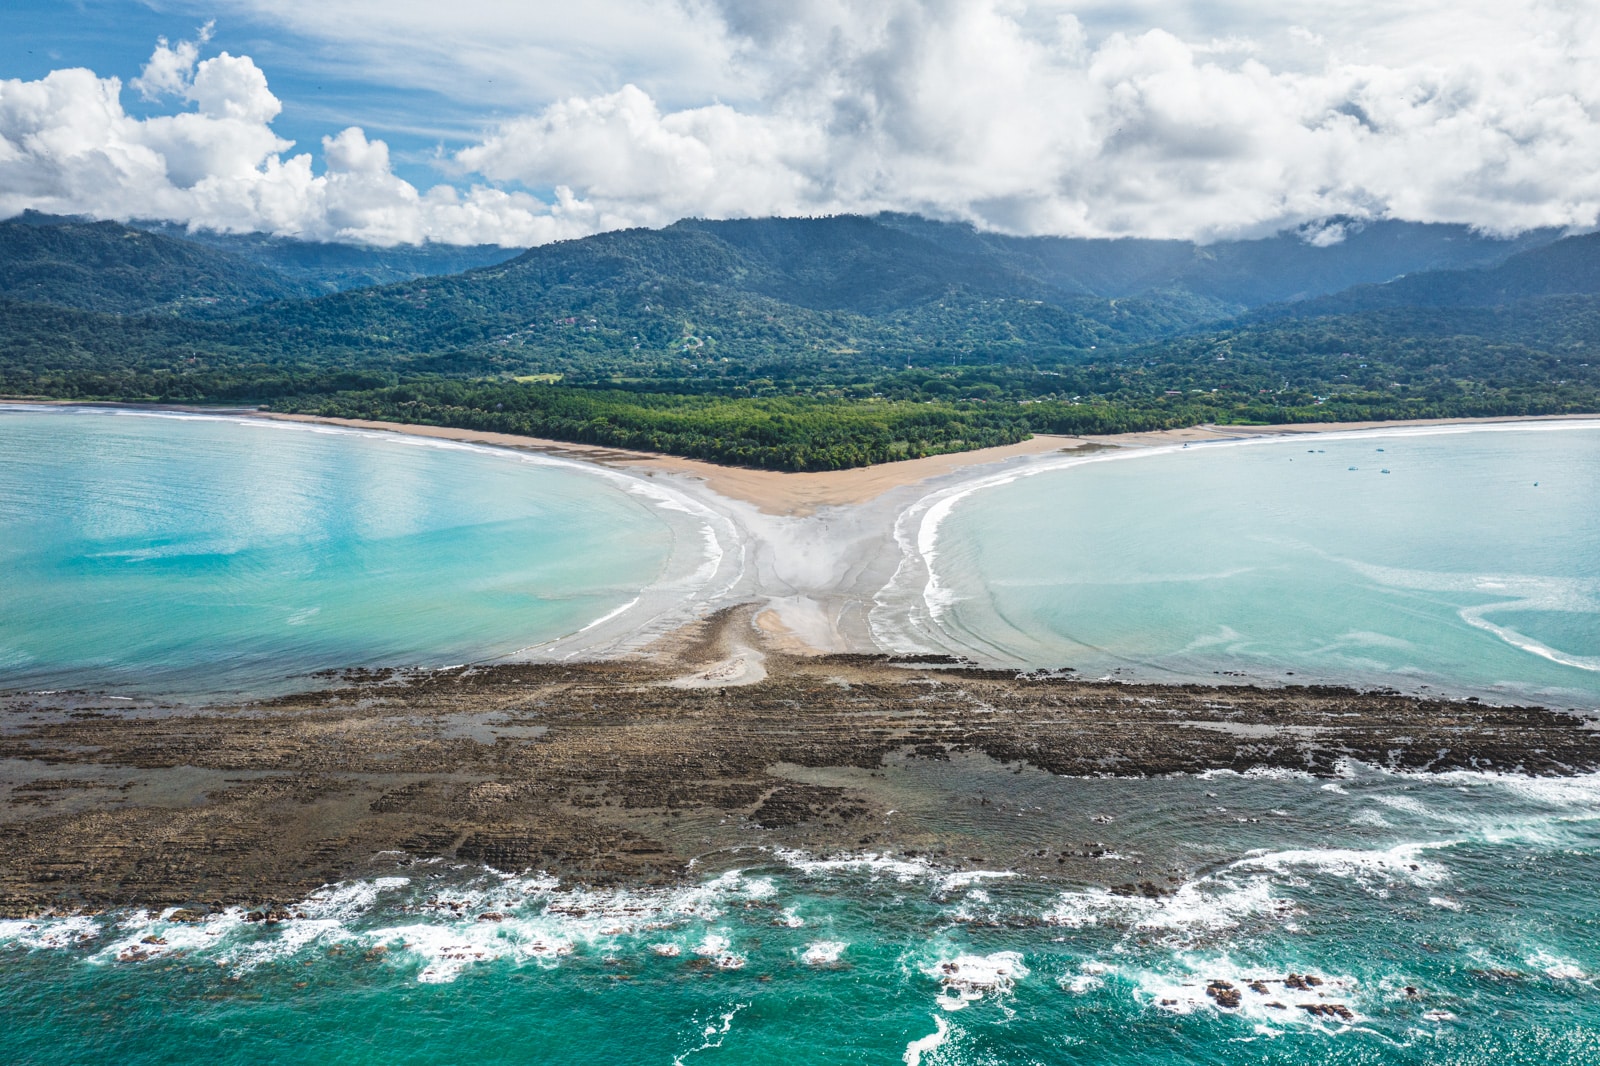 Costa Rica Travel Guide